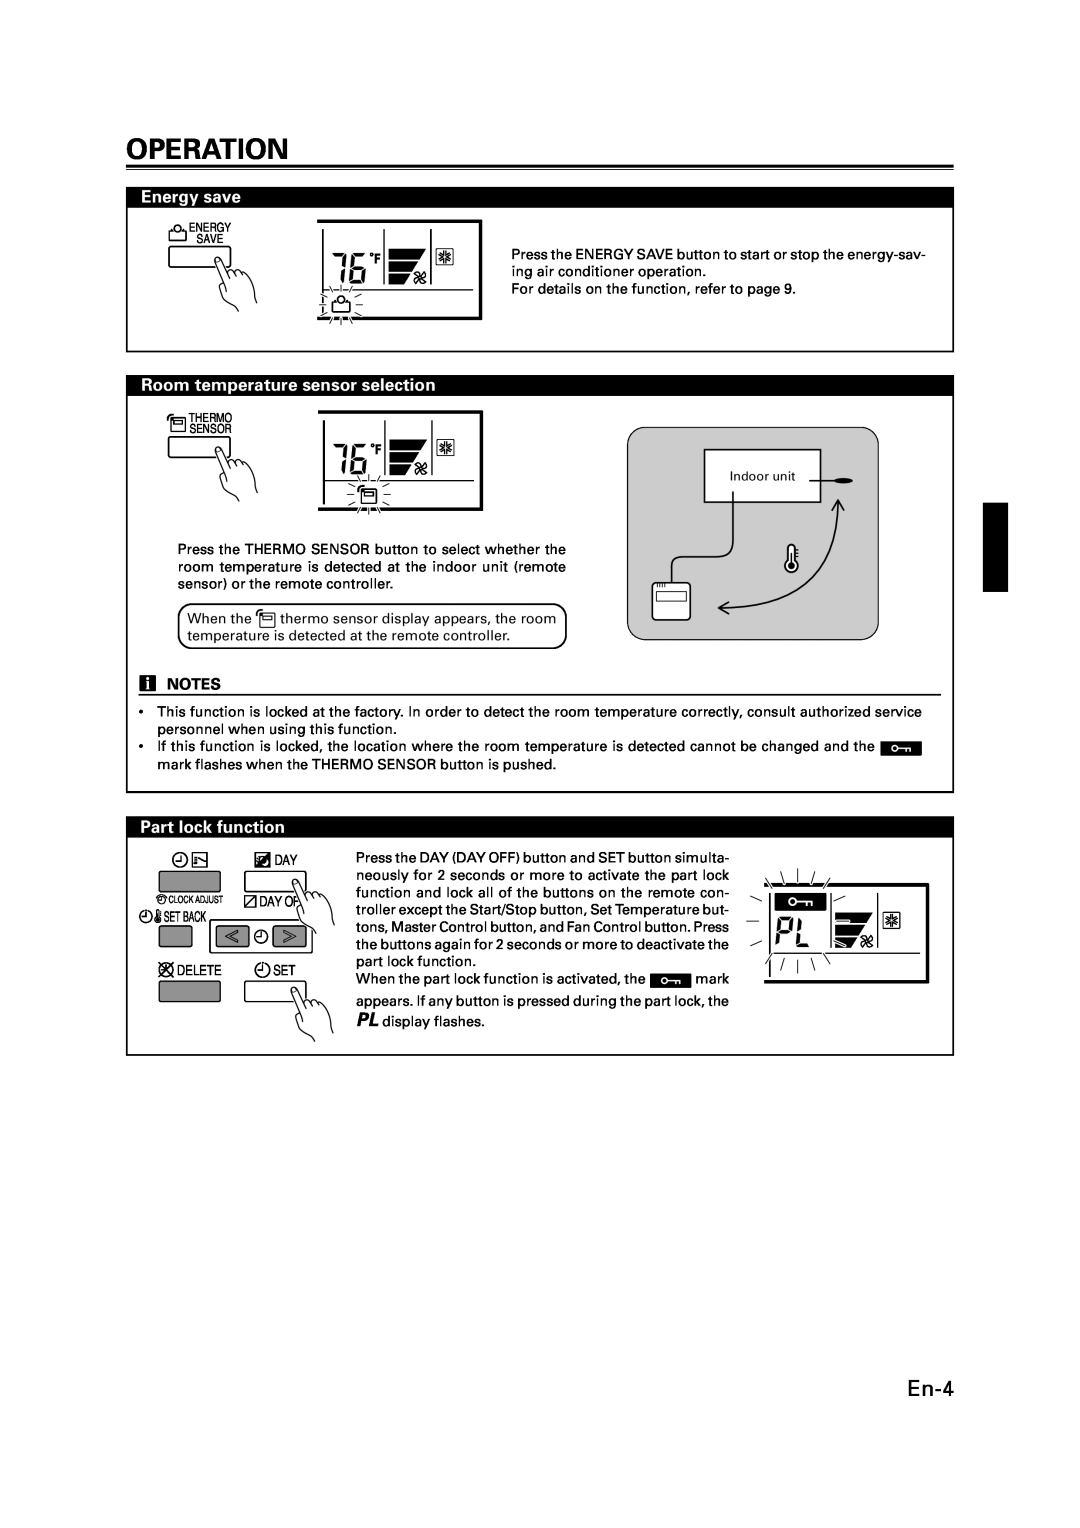 Fujitsu AIR CONDITIONER CASSETTE TYPE En-4, Operation, Energy save, Room temperature sensor selection, Part lock function 